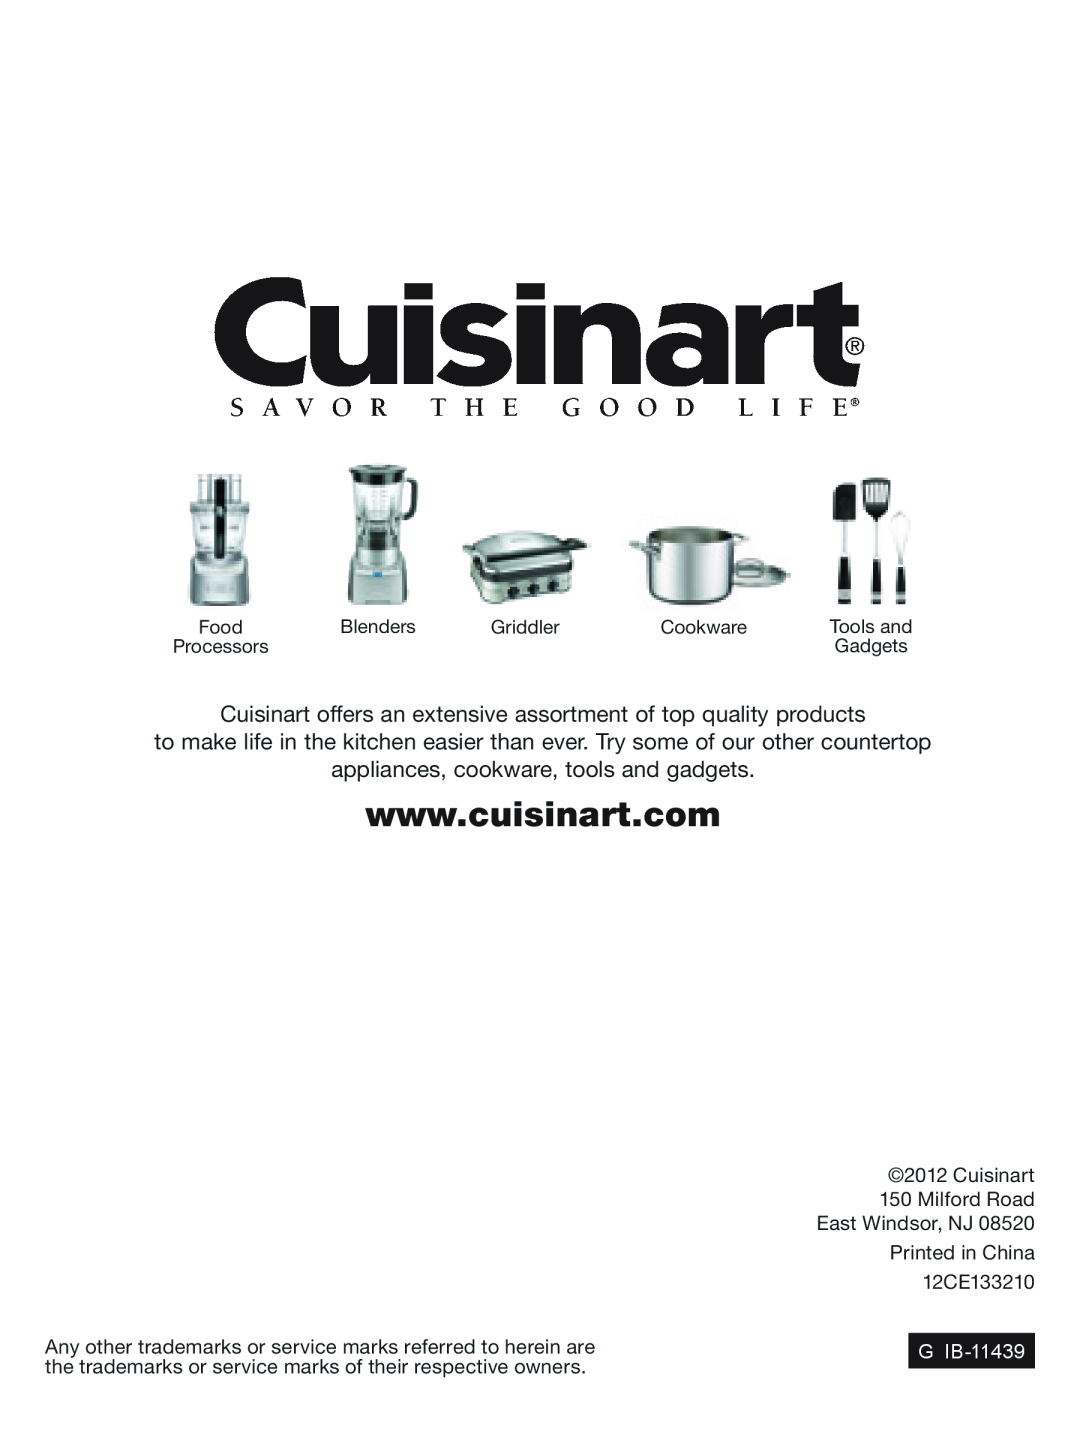 Cuisinart CPM-700 Series manual G IB-11439, Blenders, Griddler, Cookware, Processors, Gadgets 